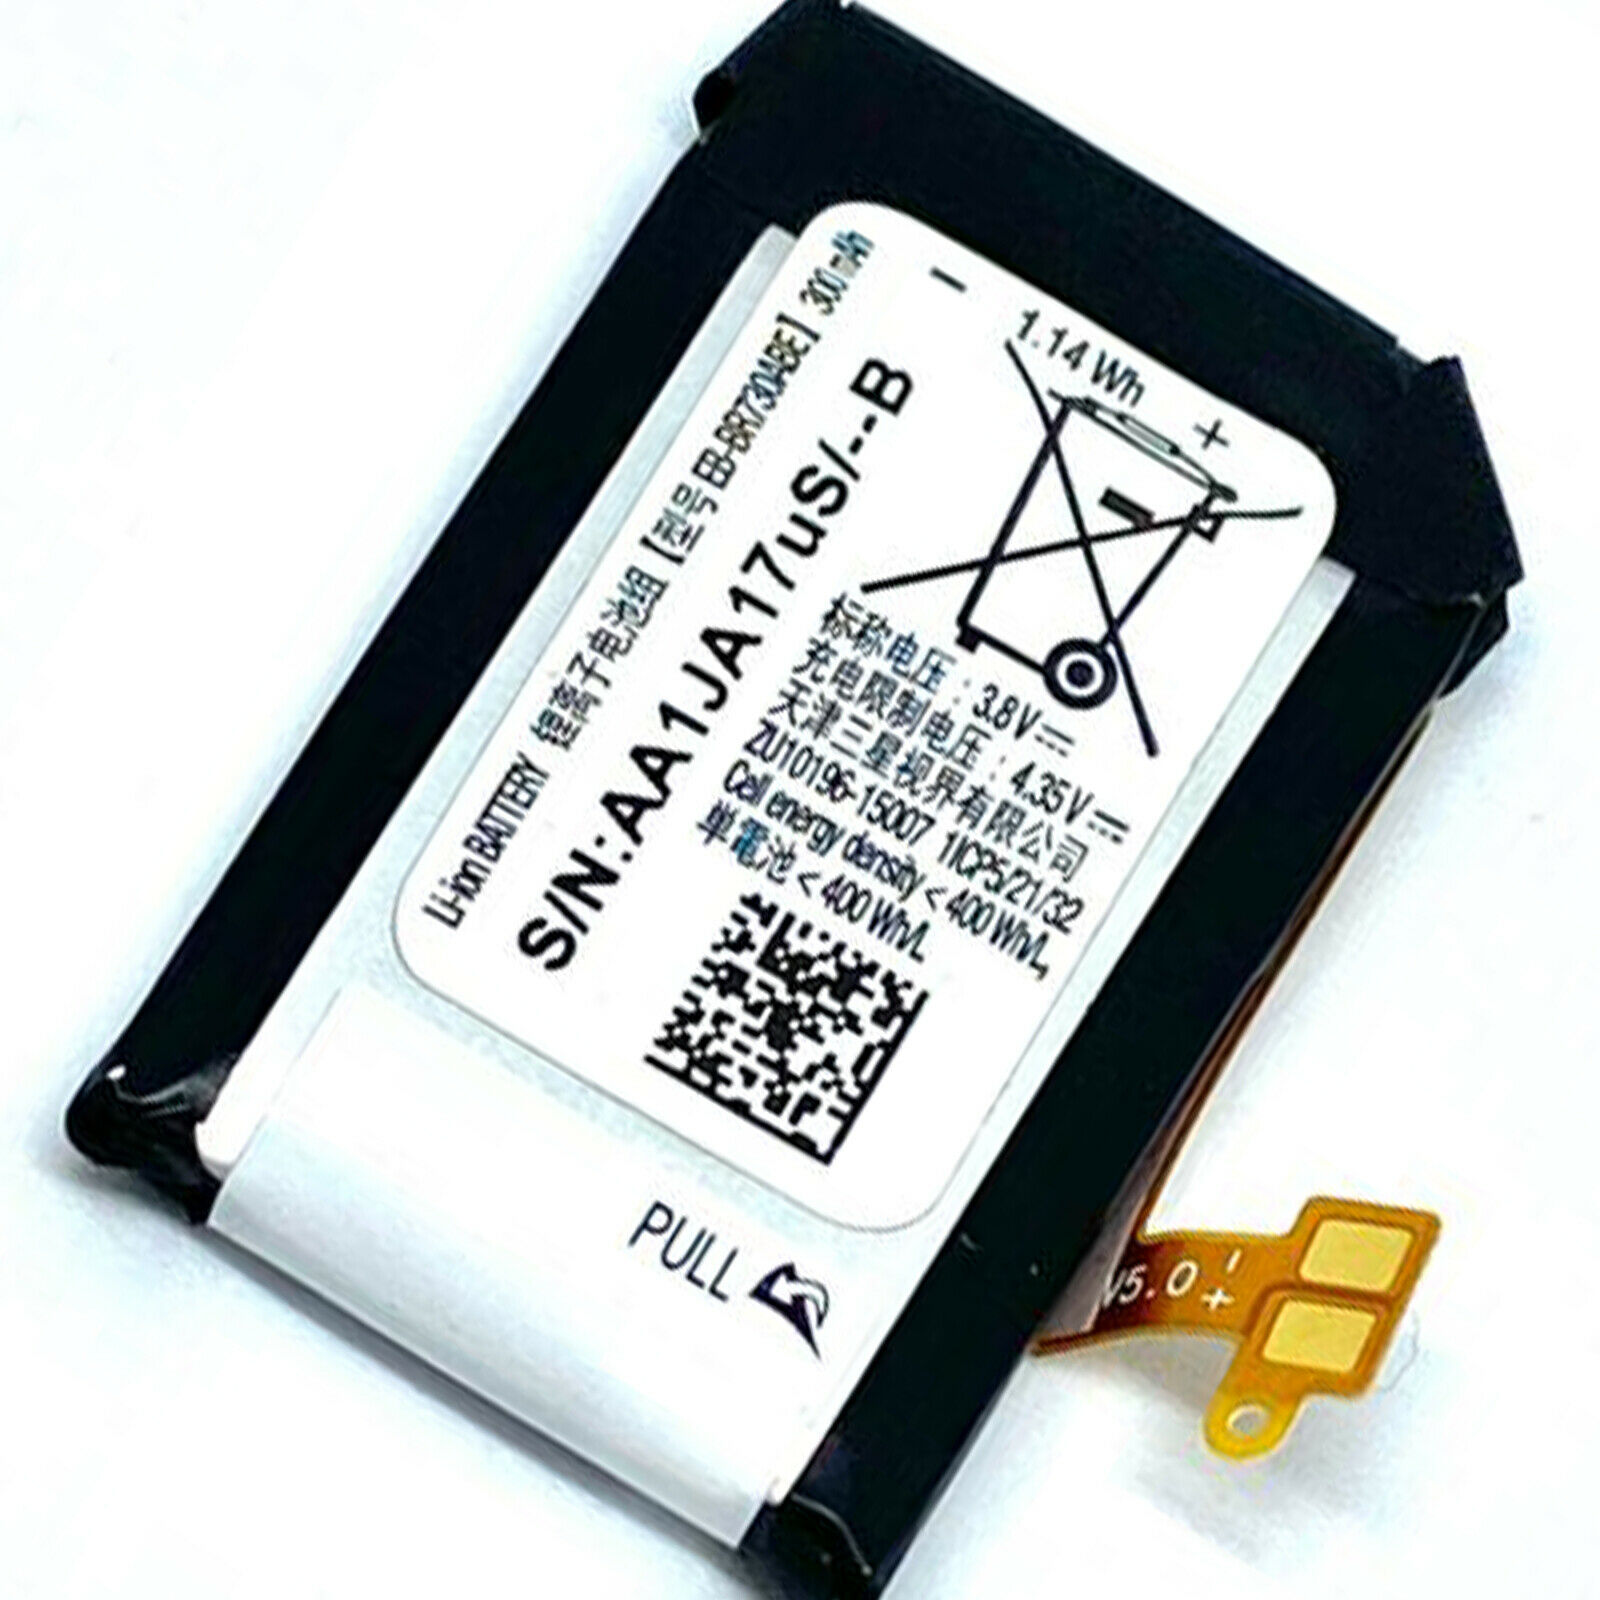 Batería SAMSUNG EB-BR730ABE FOR GEAR SPORT SM-R600 GEAR S2 SM-R730A/R735A 300mAh(compatible)